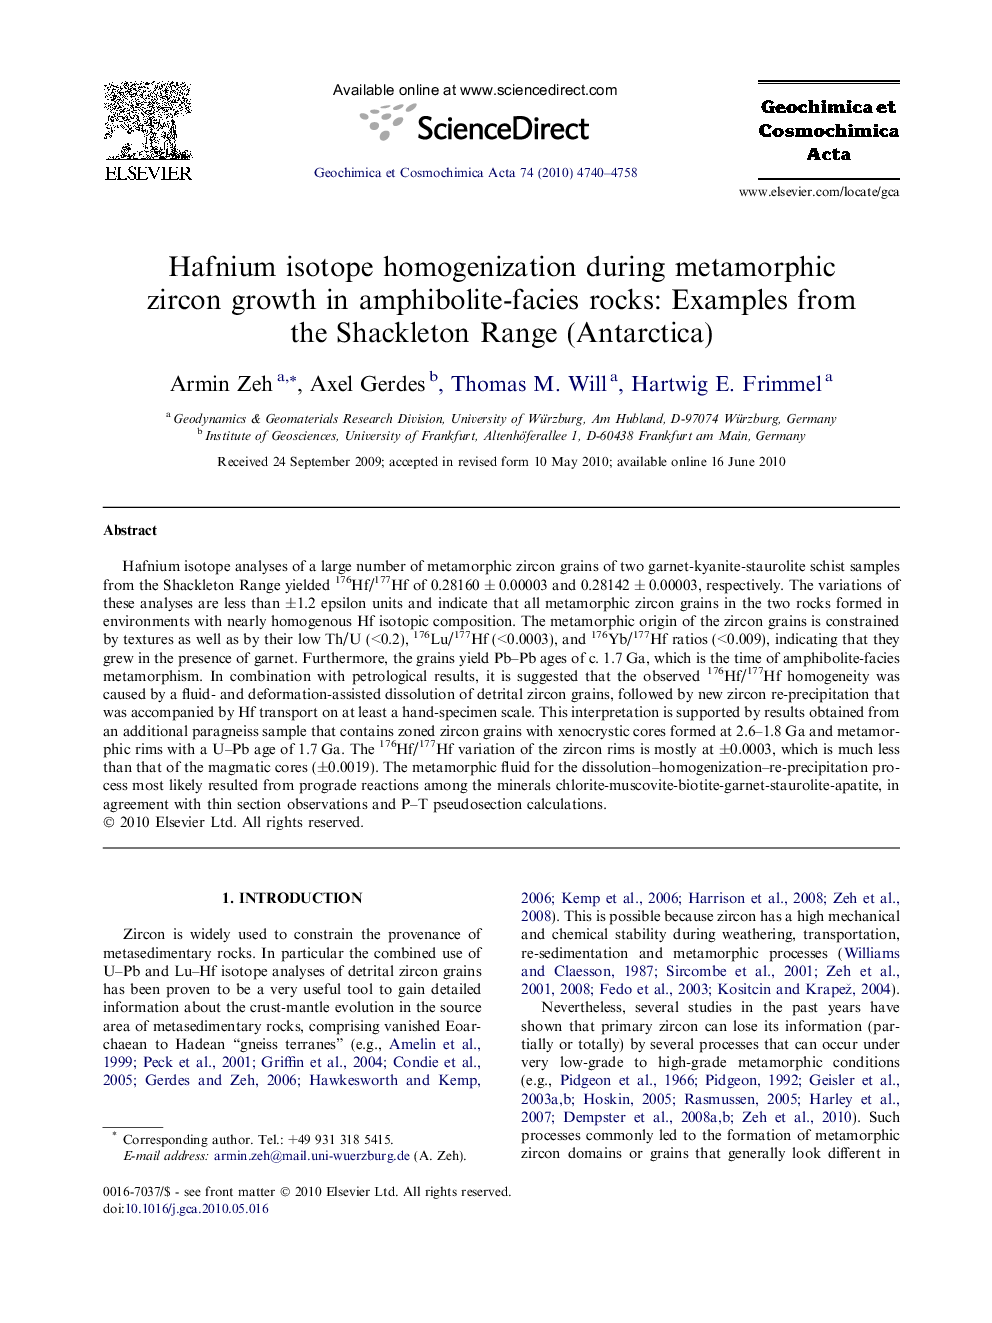 Hafnium isotope homogenization during metamorphic zircon growth in amphibolite-facies rocks: Examples from the Shackleton Range (Antarctica)